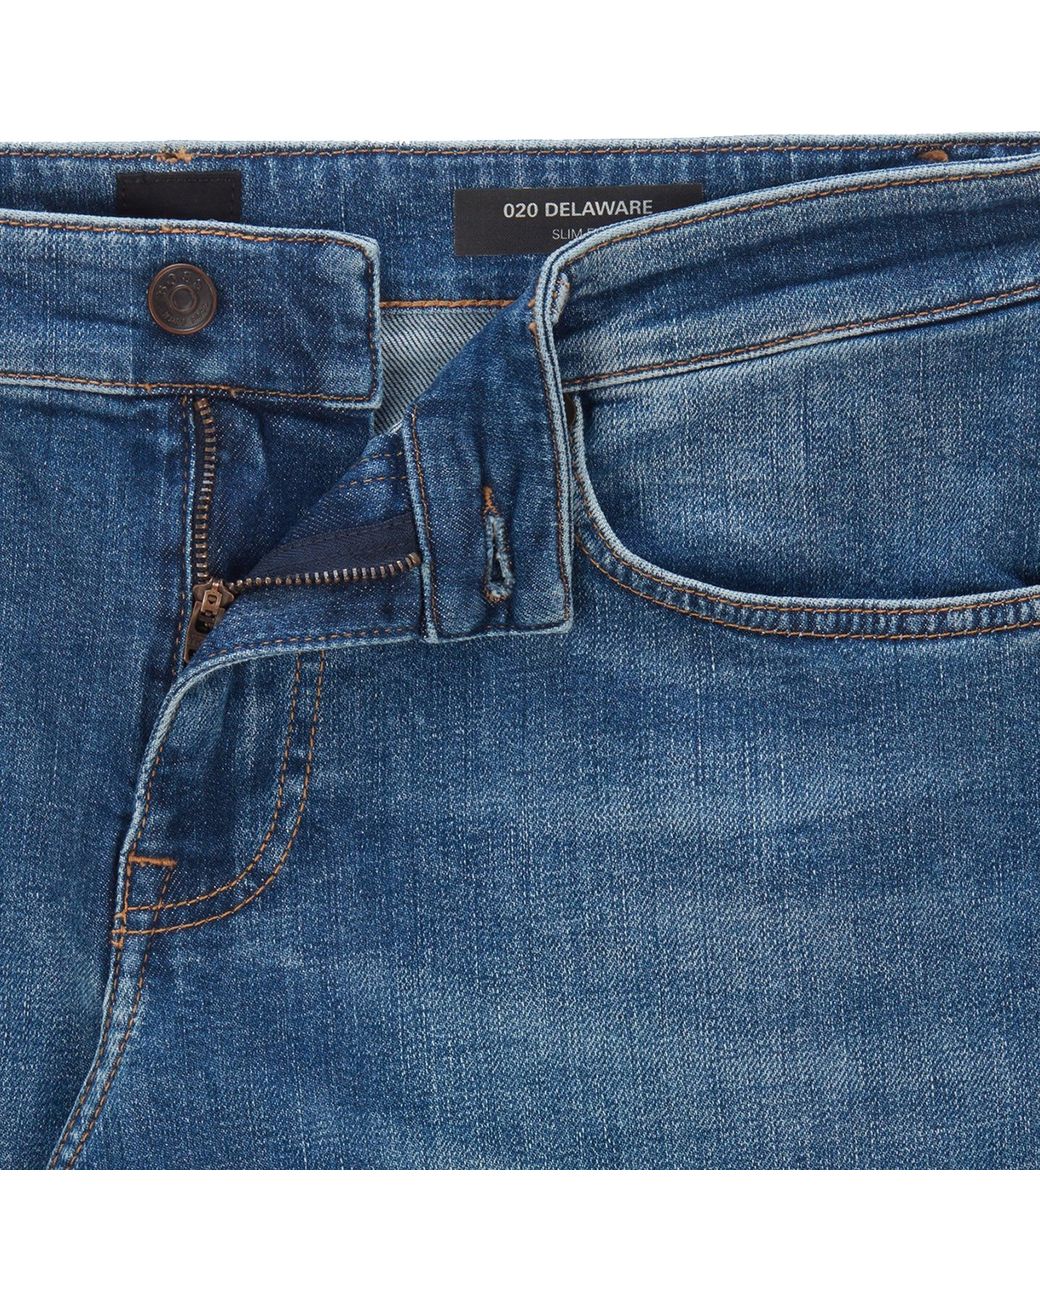 BOSS by HUGO BOSS Denim Delaware Slim Fit Jeans in Blue for Men - Save 2% |  Lyst